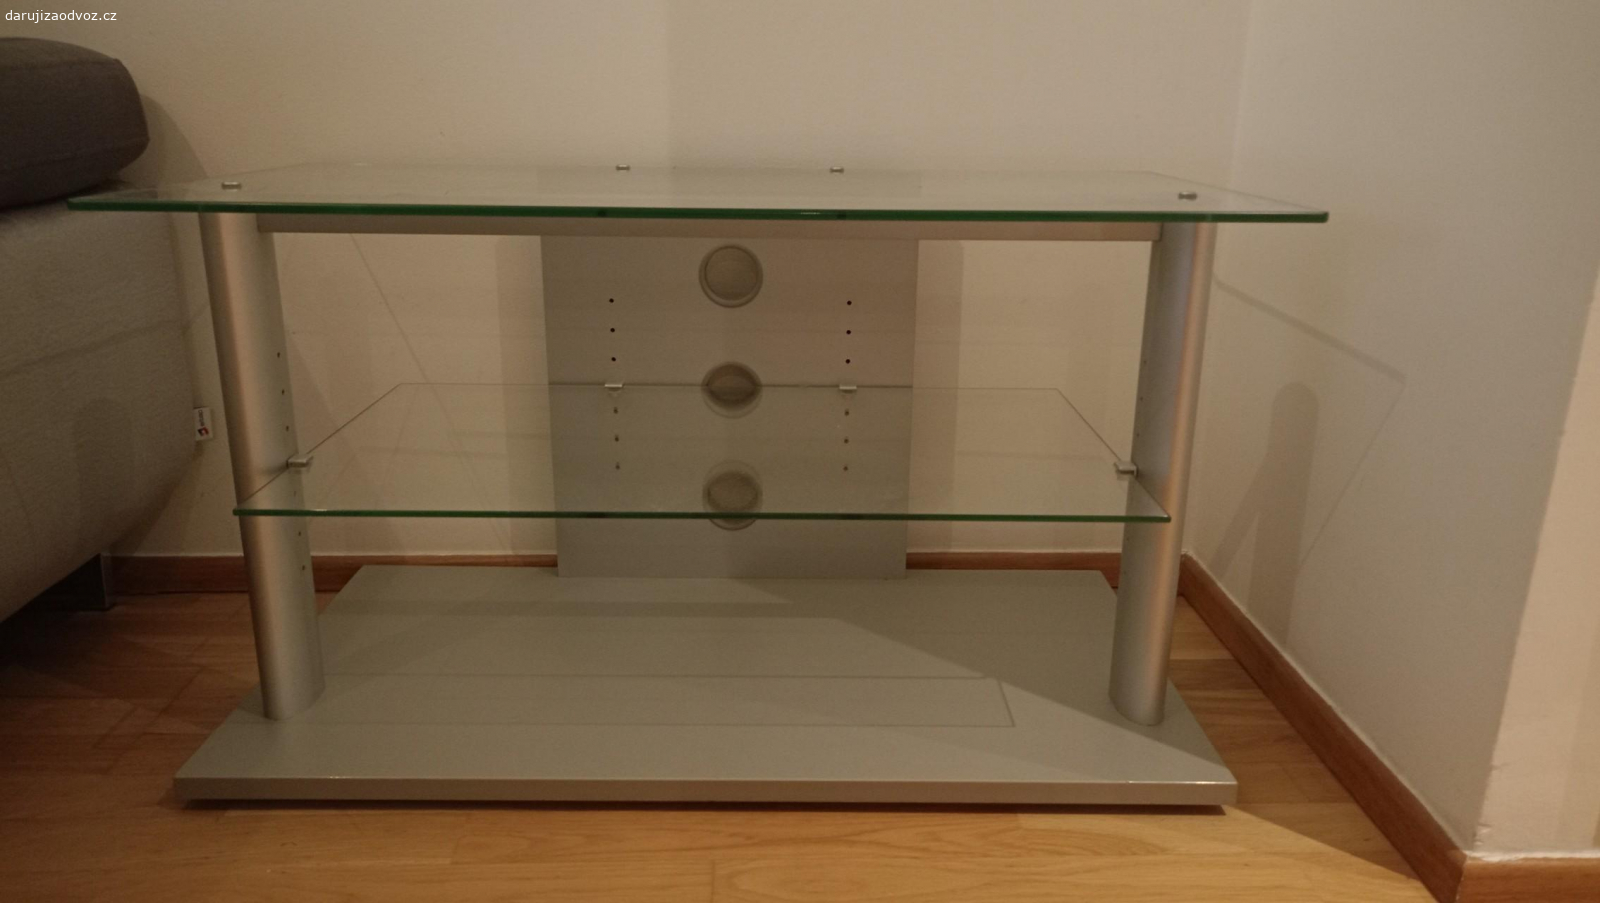 Televizní stolek. výška 50 cm, šířka 90 cm, hloubka 45 cm